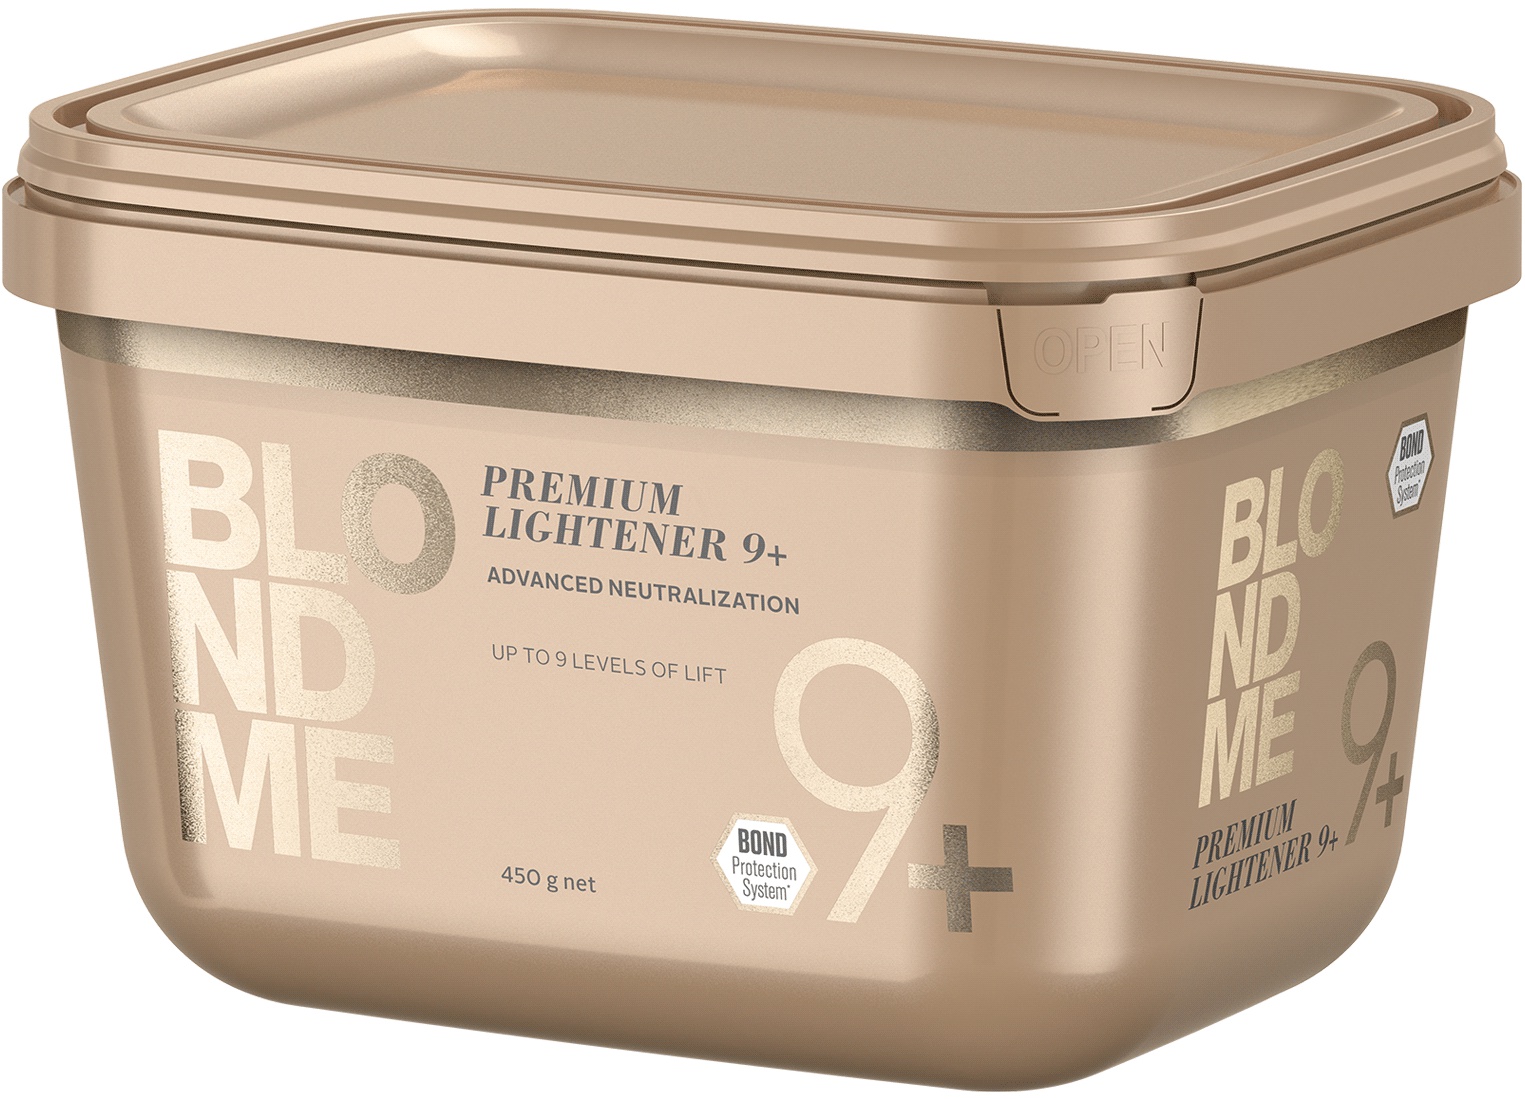 Schwarzkopf Professional Blondme Premium Lightener 9+